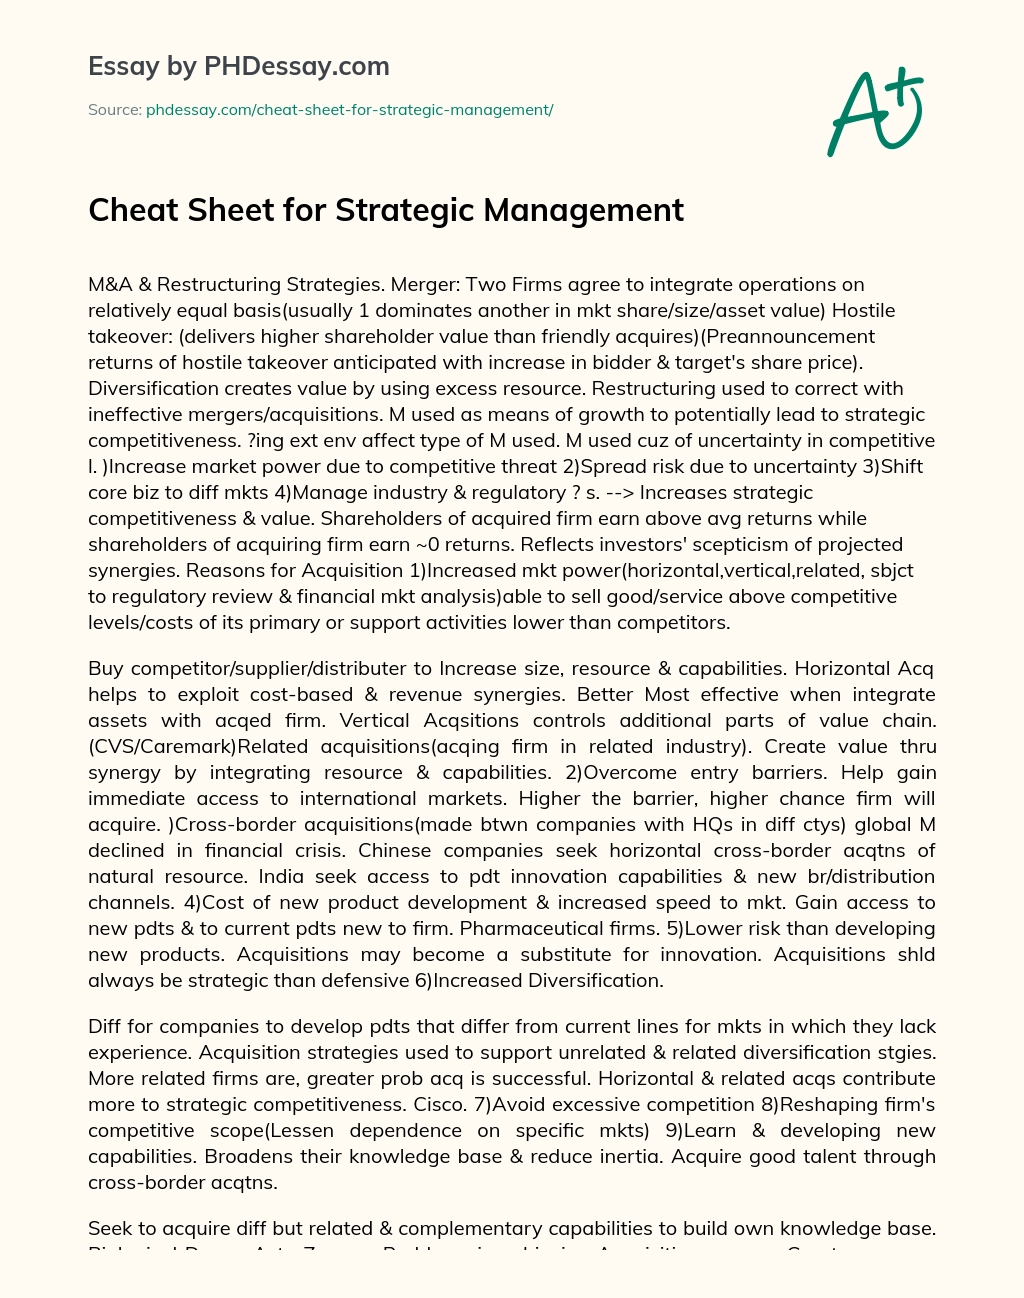 Cheat Sheet for Strategic Management essay